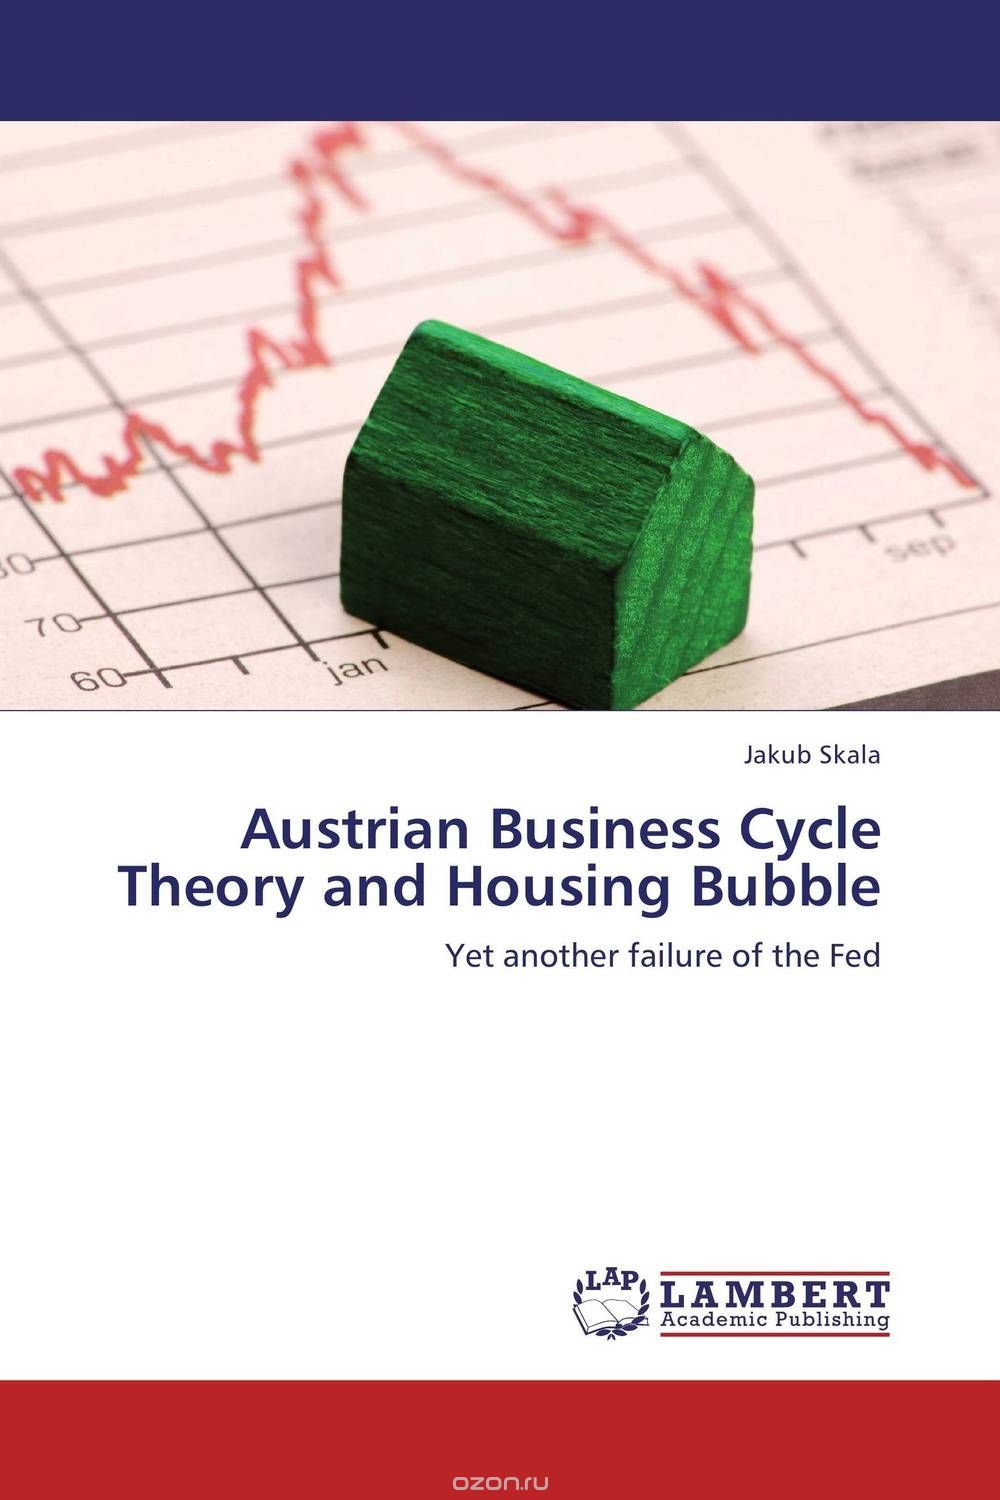 Скачать книгу "Austrian Business Cycle Theory and Housing Bubble"